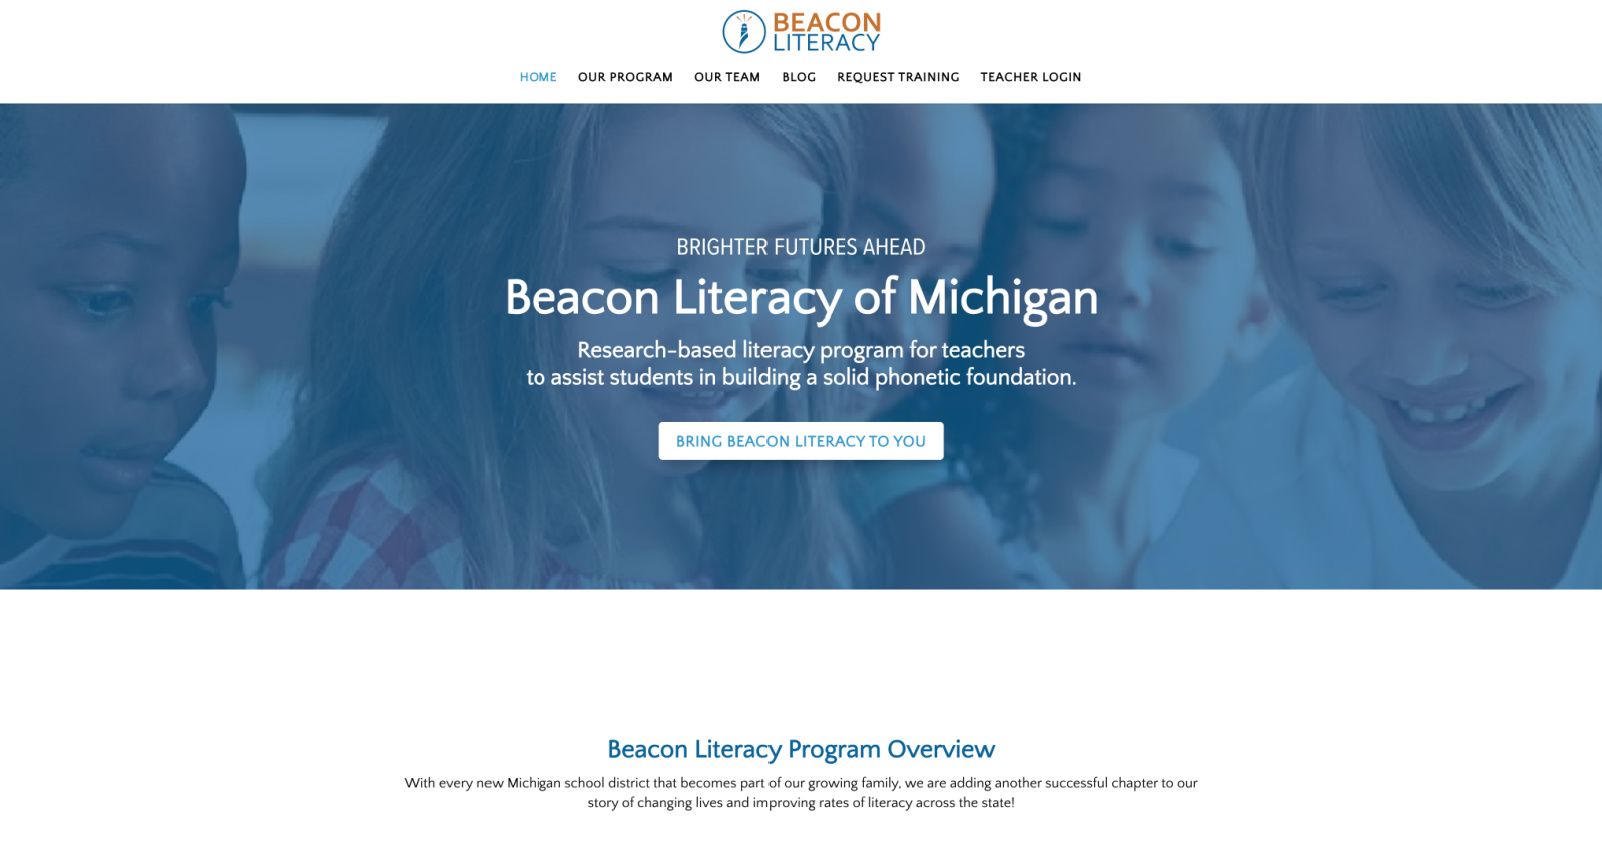 Beacon Literacy of MI website